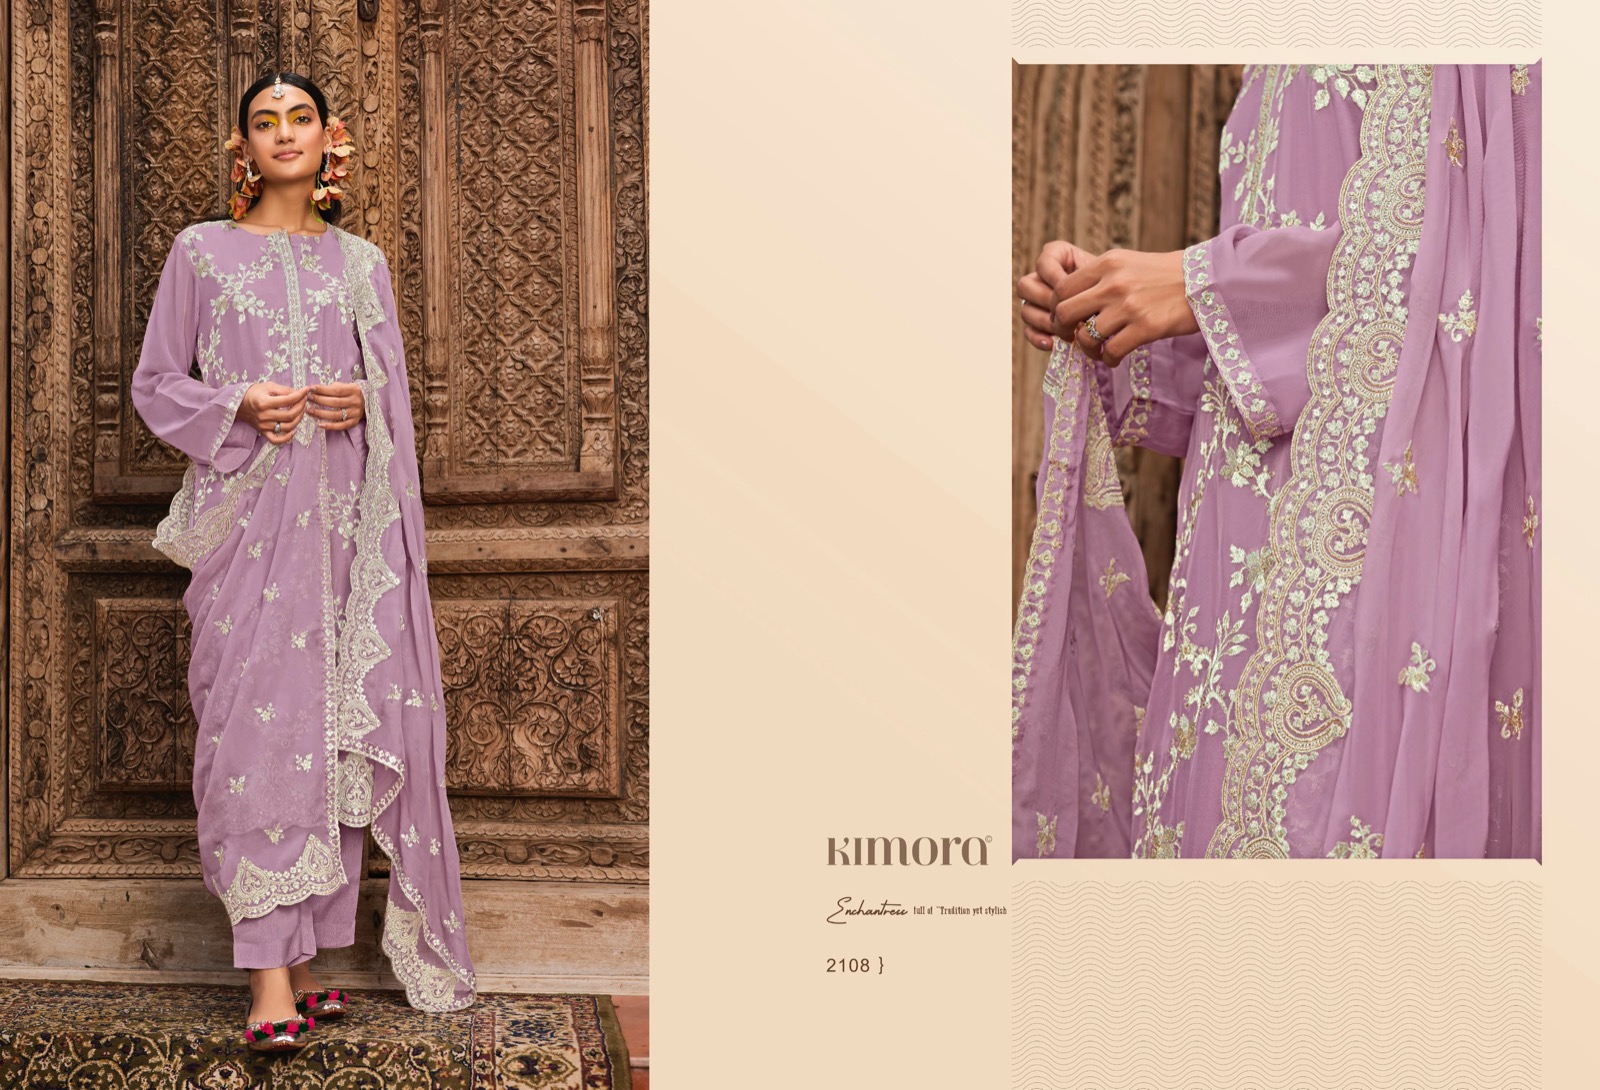 Kimora Fashion Ruhani Hit List 2108